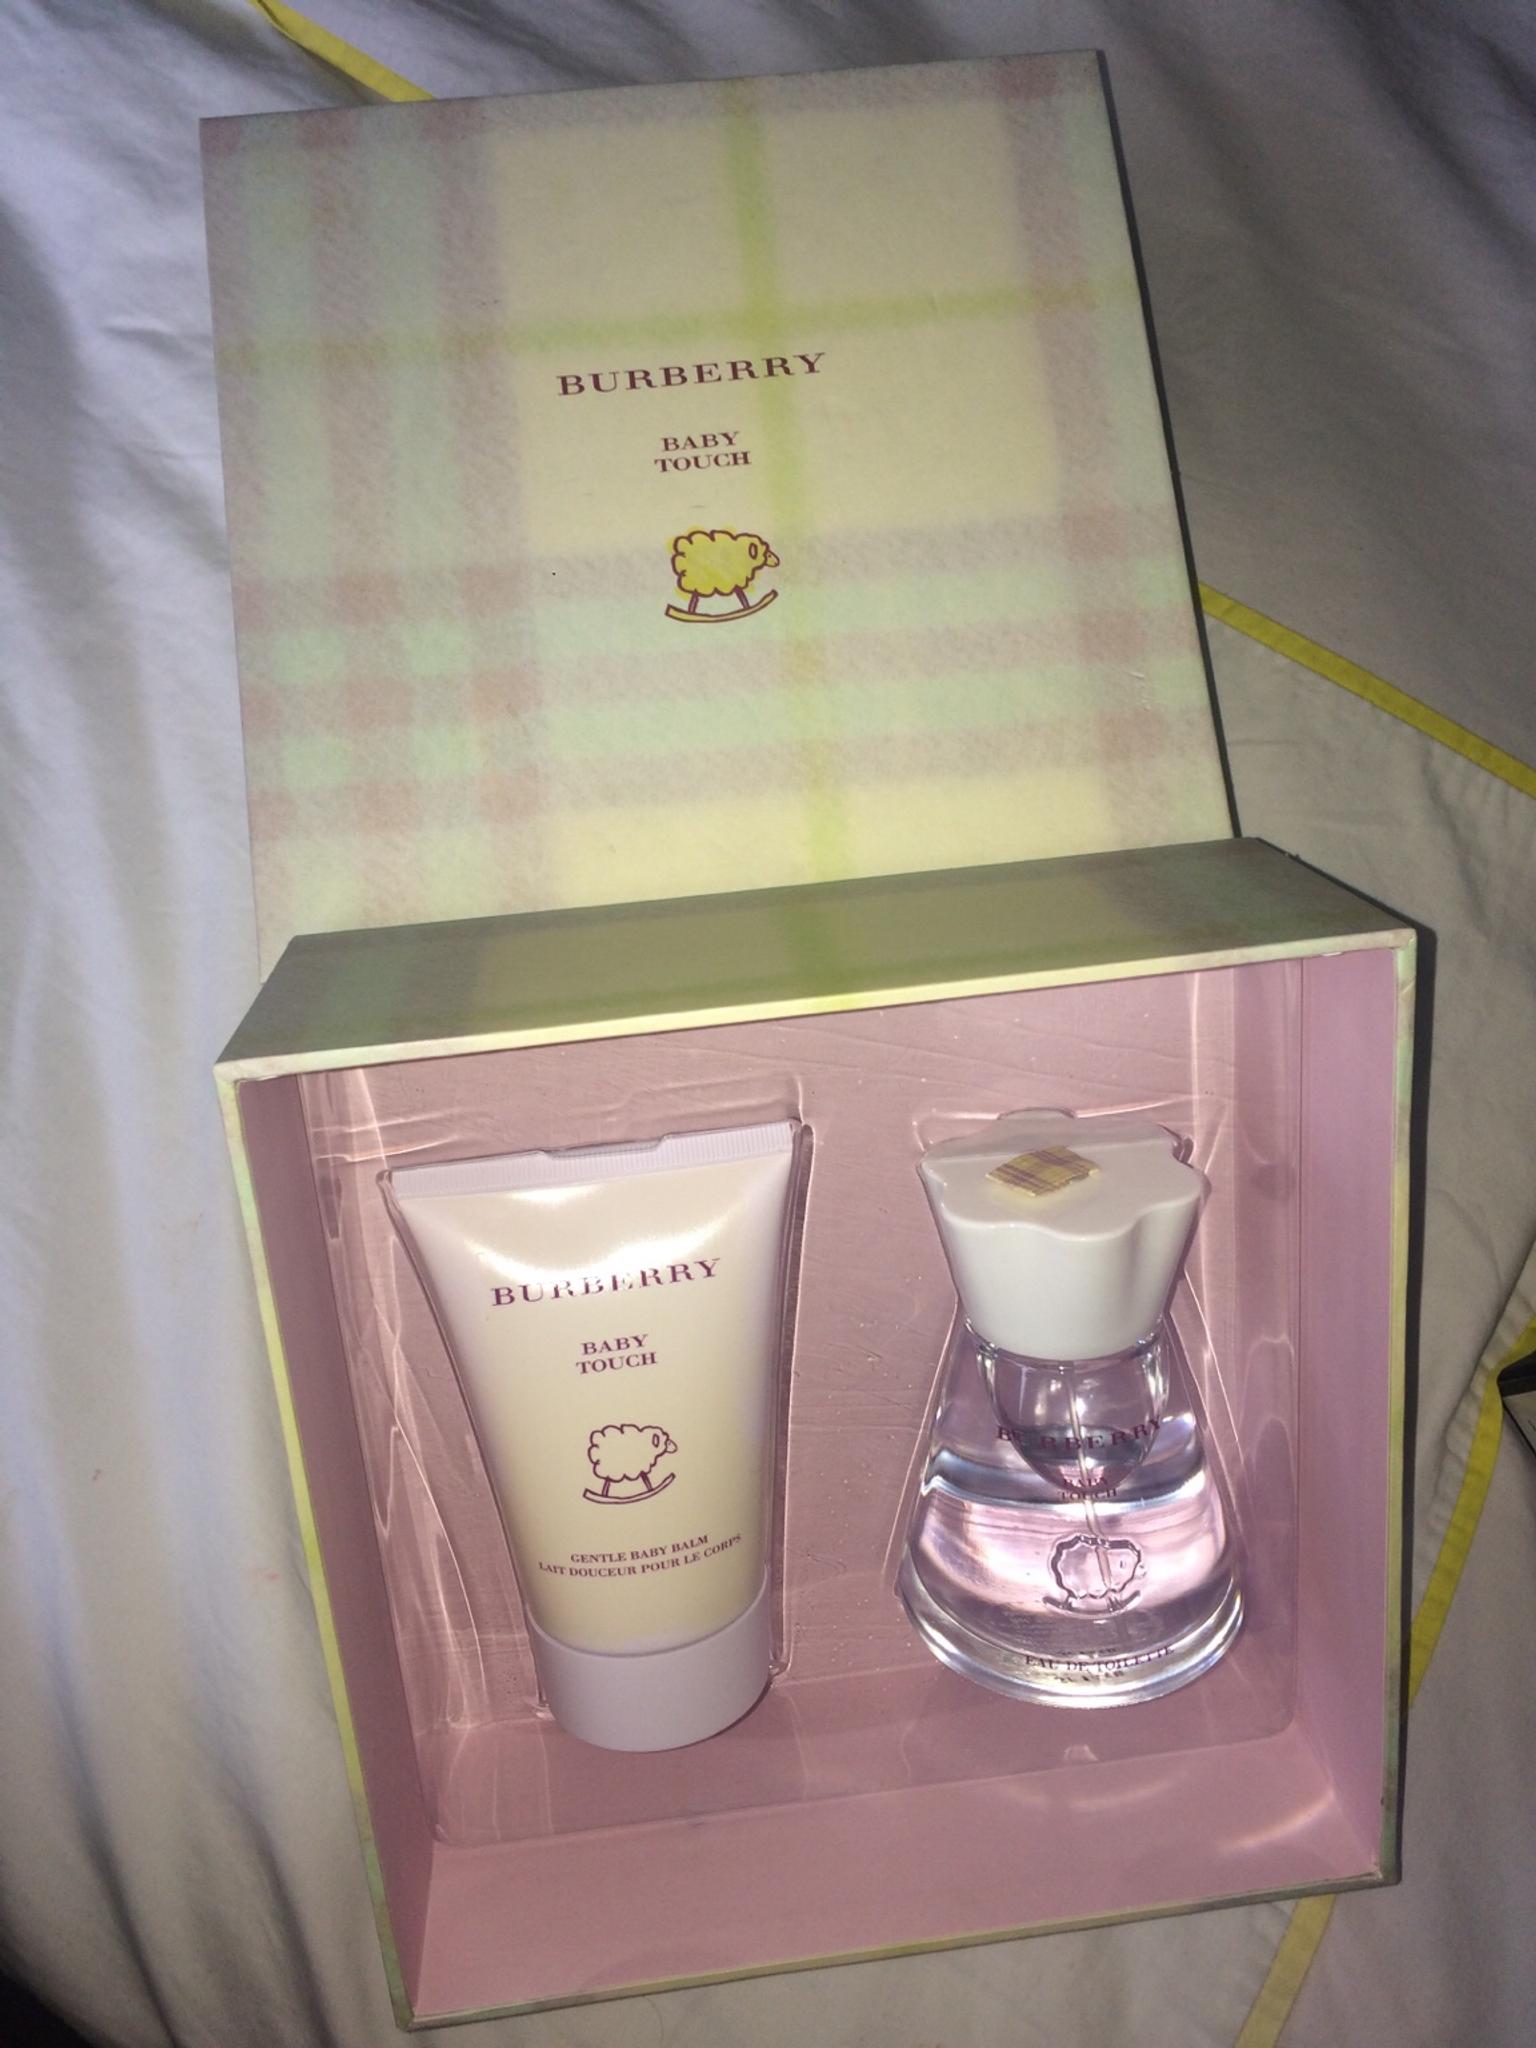 burberry baby perfume gift set